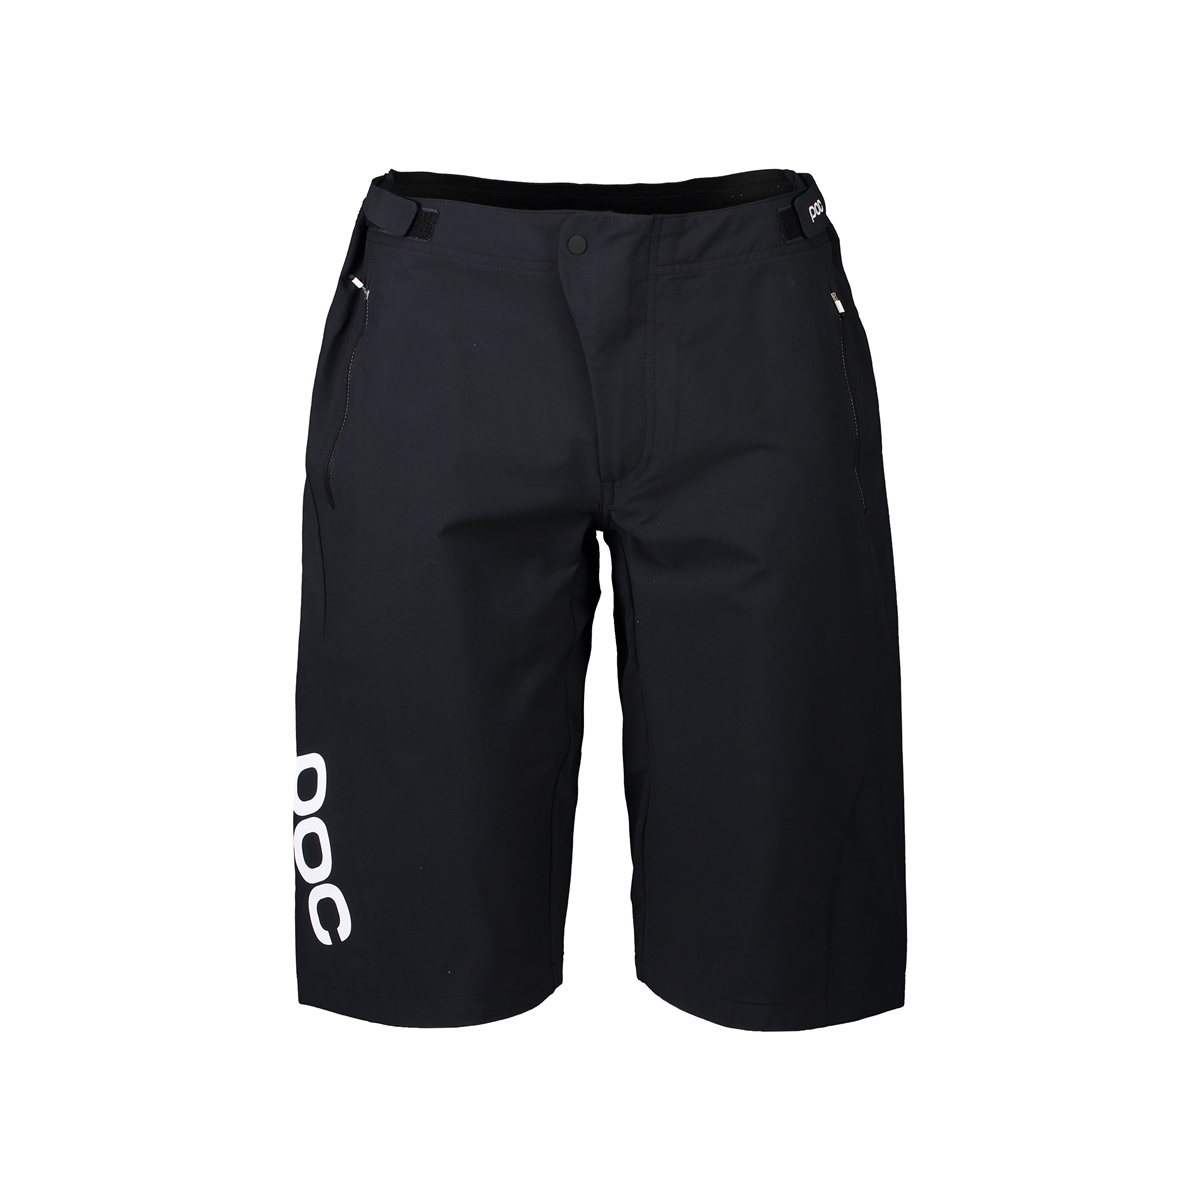 Essential Enduro Shorts black size XS